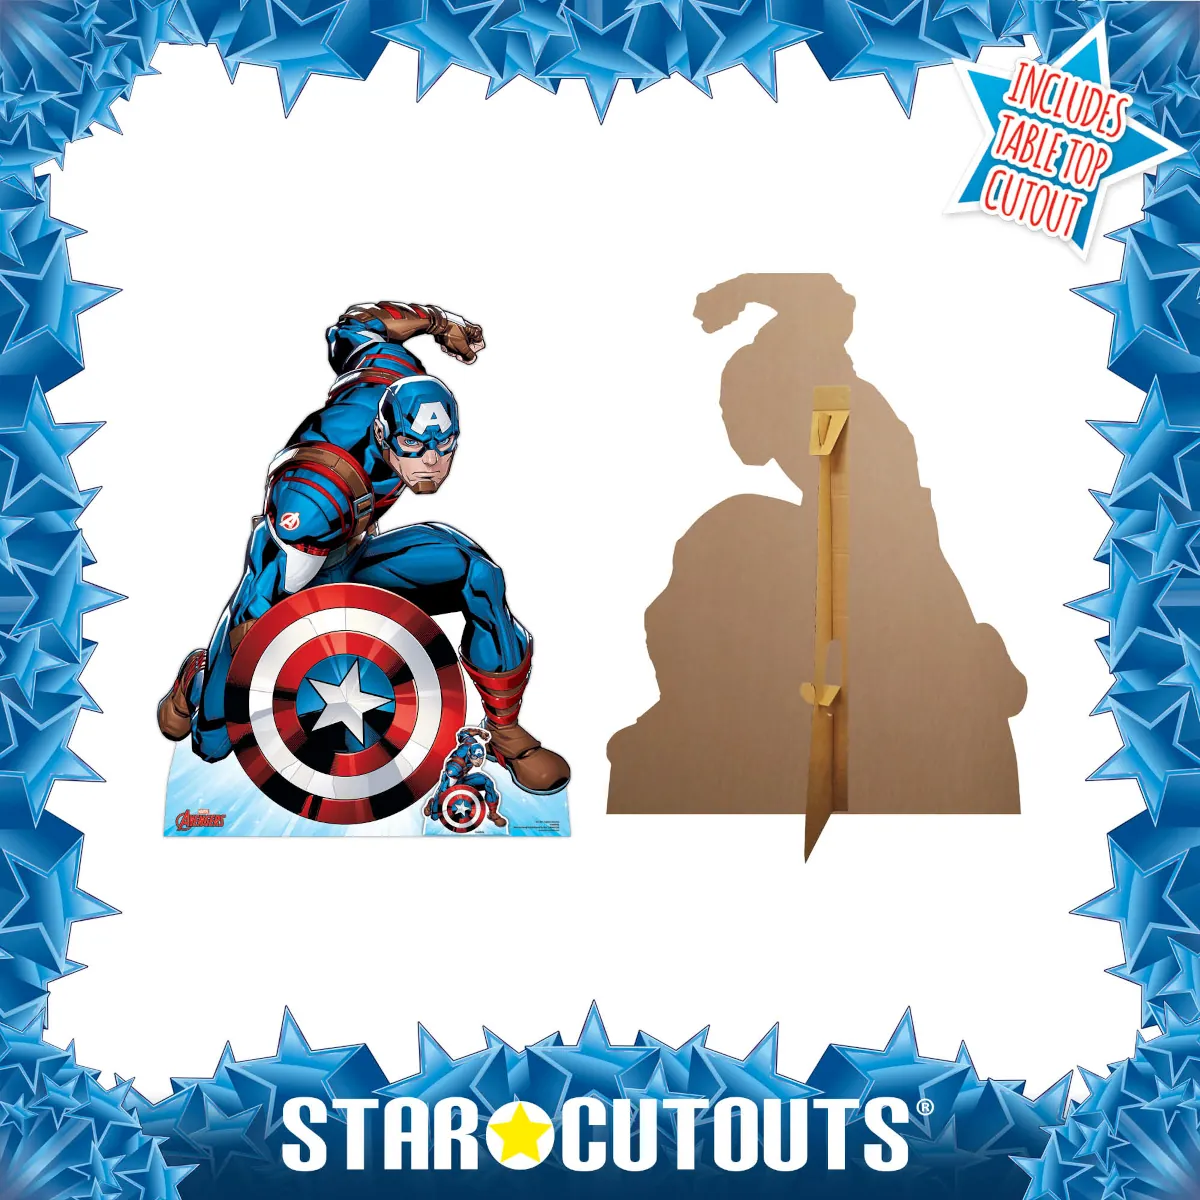 Captain America 'First Avenger' (Marvel Avengers) Lifesize + Mini Cardboard Cutout Frame